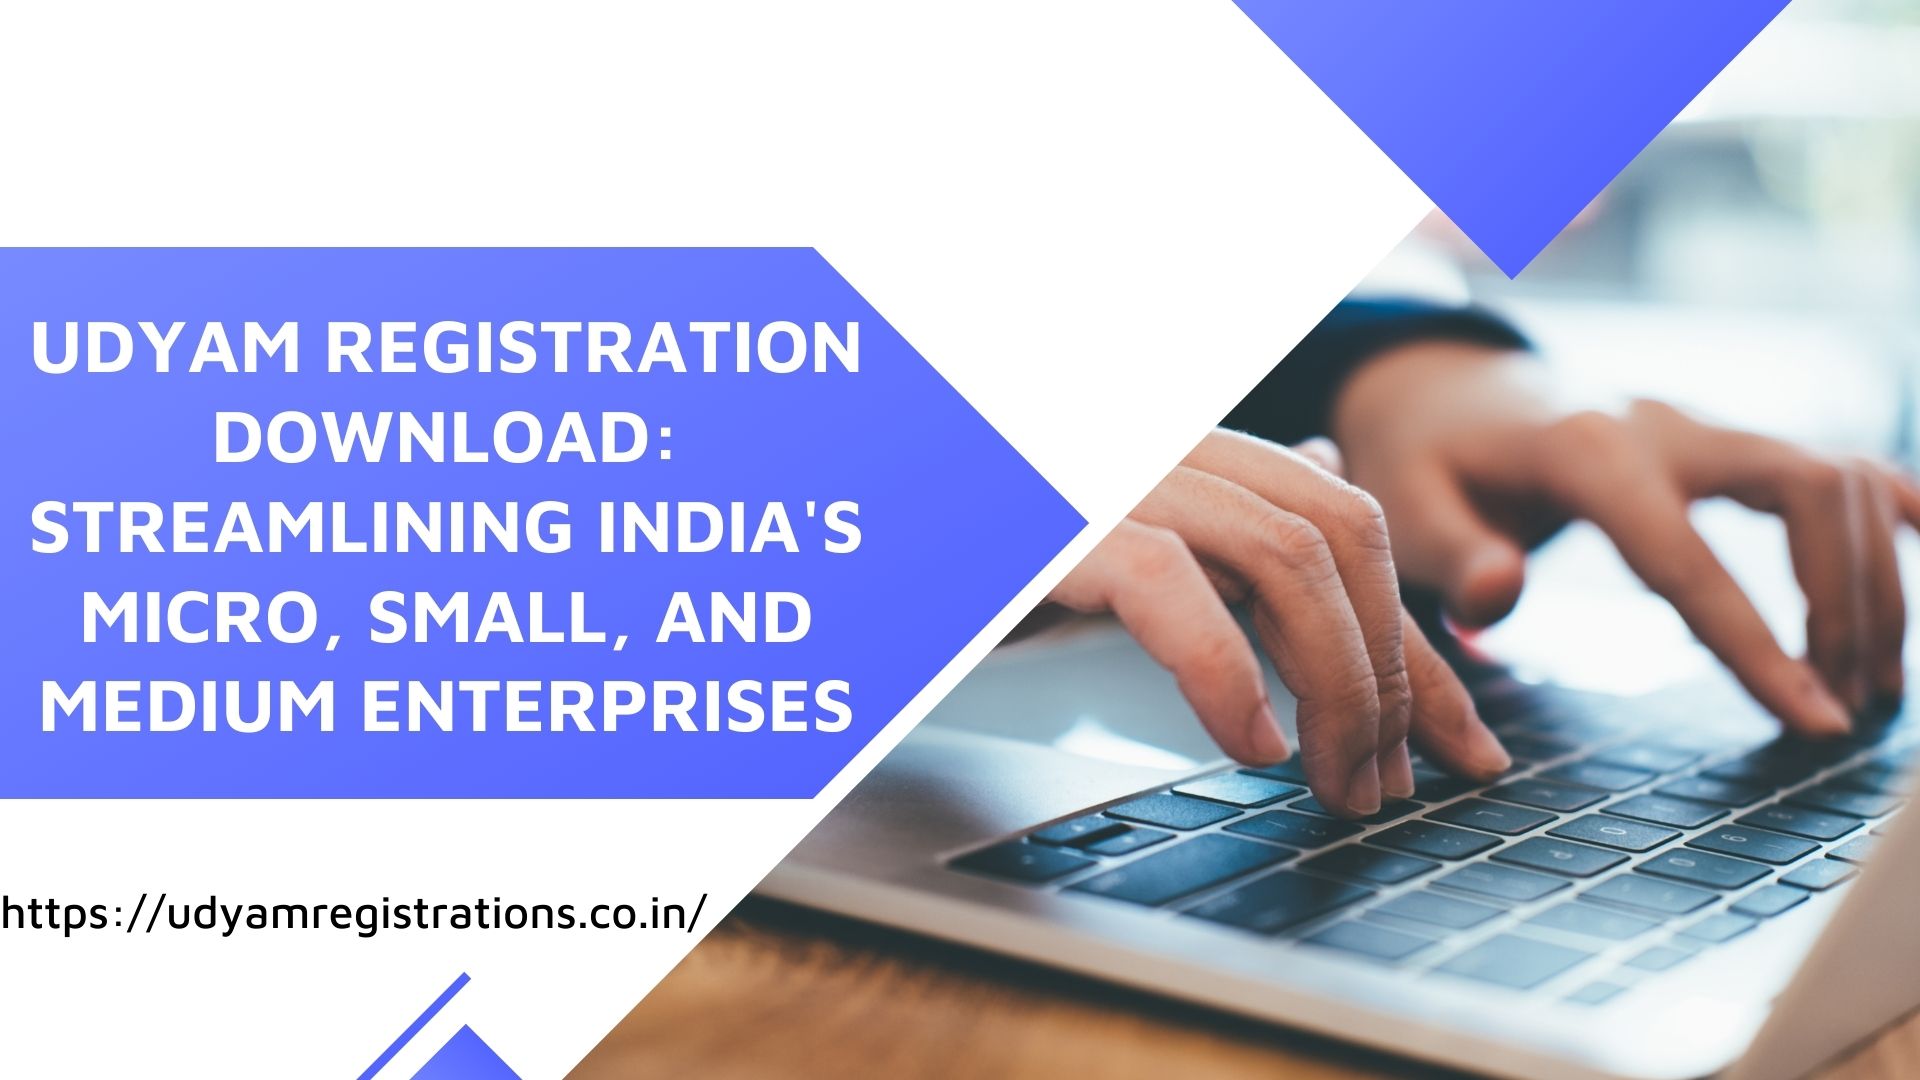 Udyam Registration Download: Streamlining India's Micro, Small, and Medium Enterprises